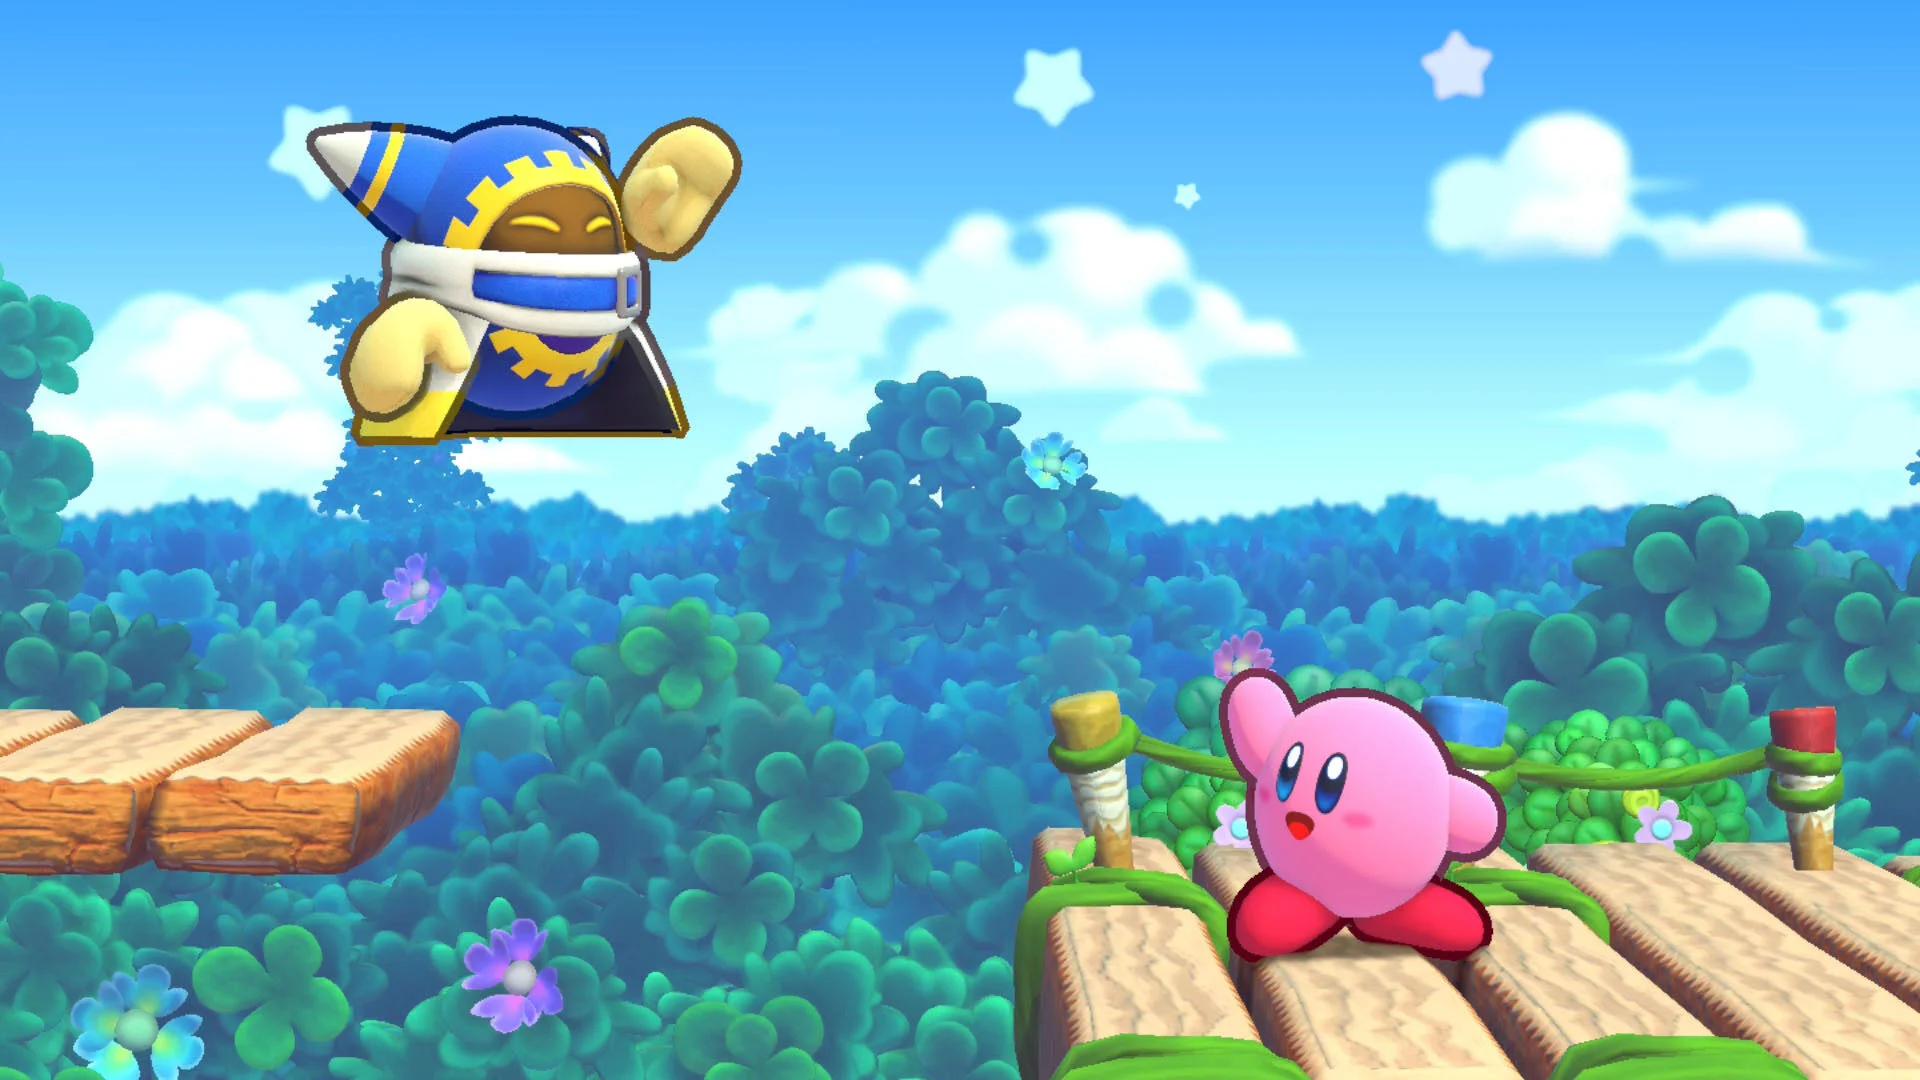 Sneak peek: What's new in Kirby's Return to Dream Land Deluxe?